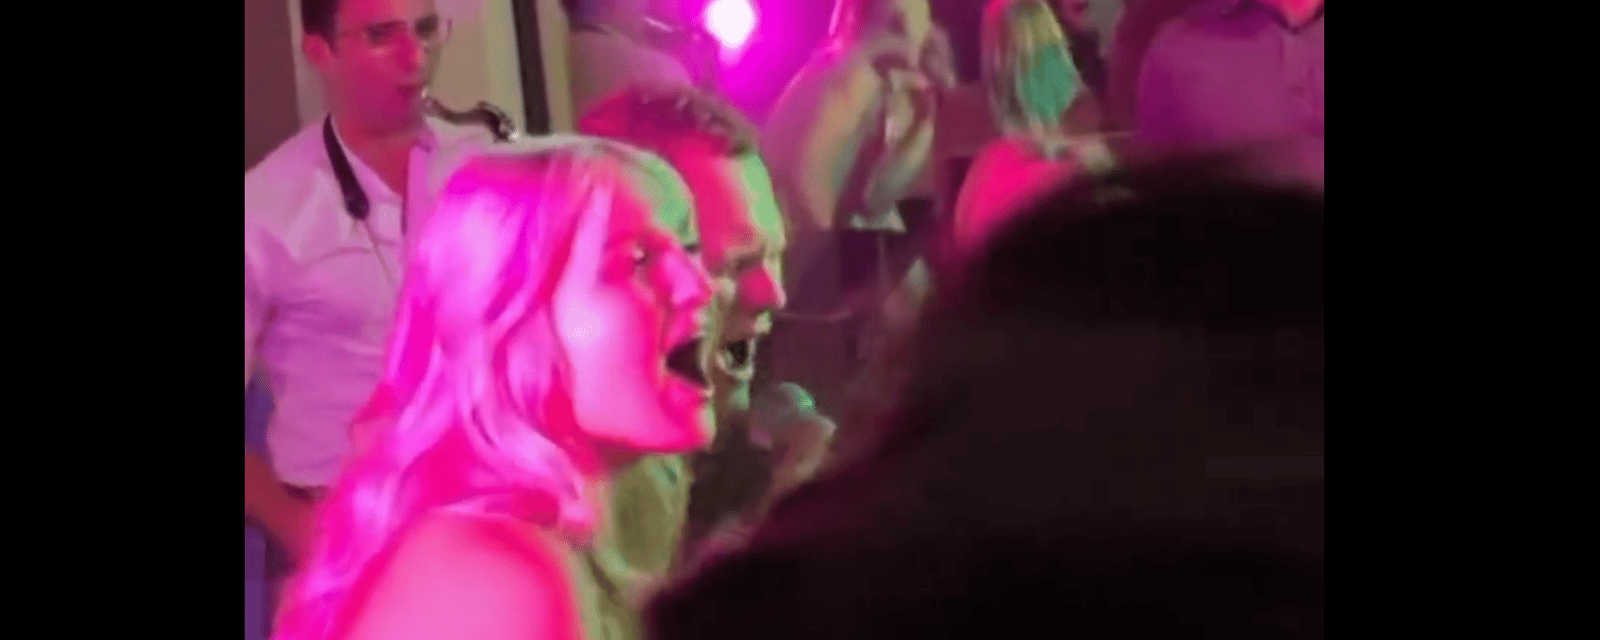 Shirtless Brady Tkachuk's karaoke video goes viral